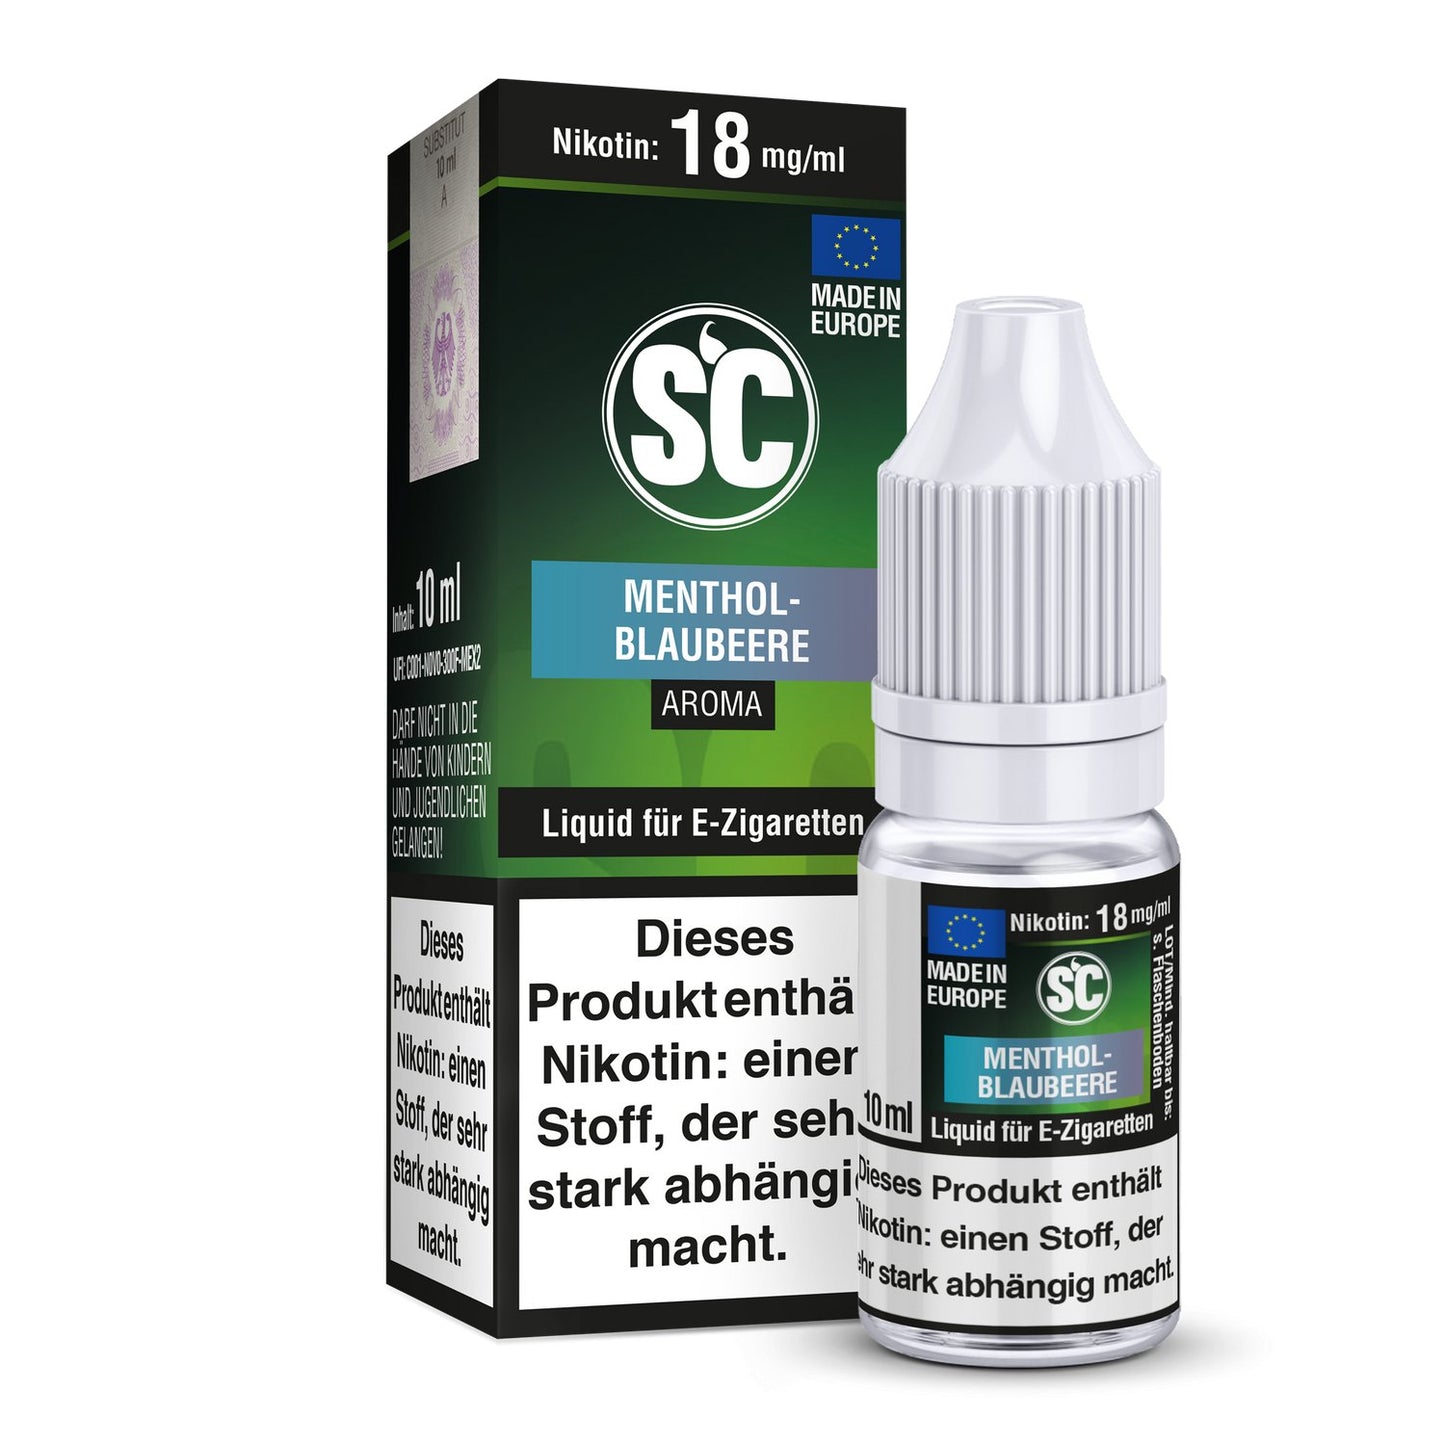 SC - Menthol-Blaubeere - 10ml Fertigliquid (Nikotinfrei/Nikotin) - 1er Packung 18 mg/ml - Vapes4you